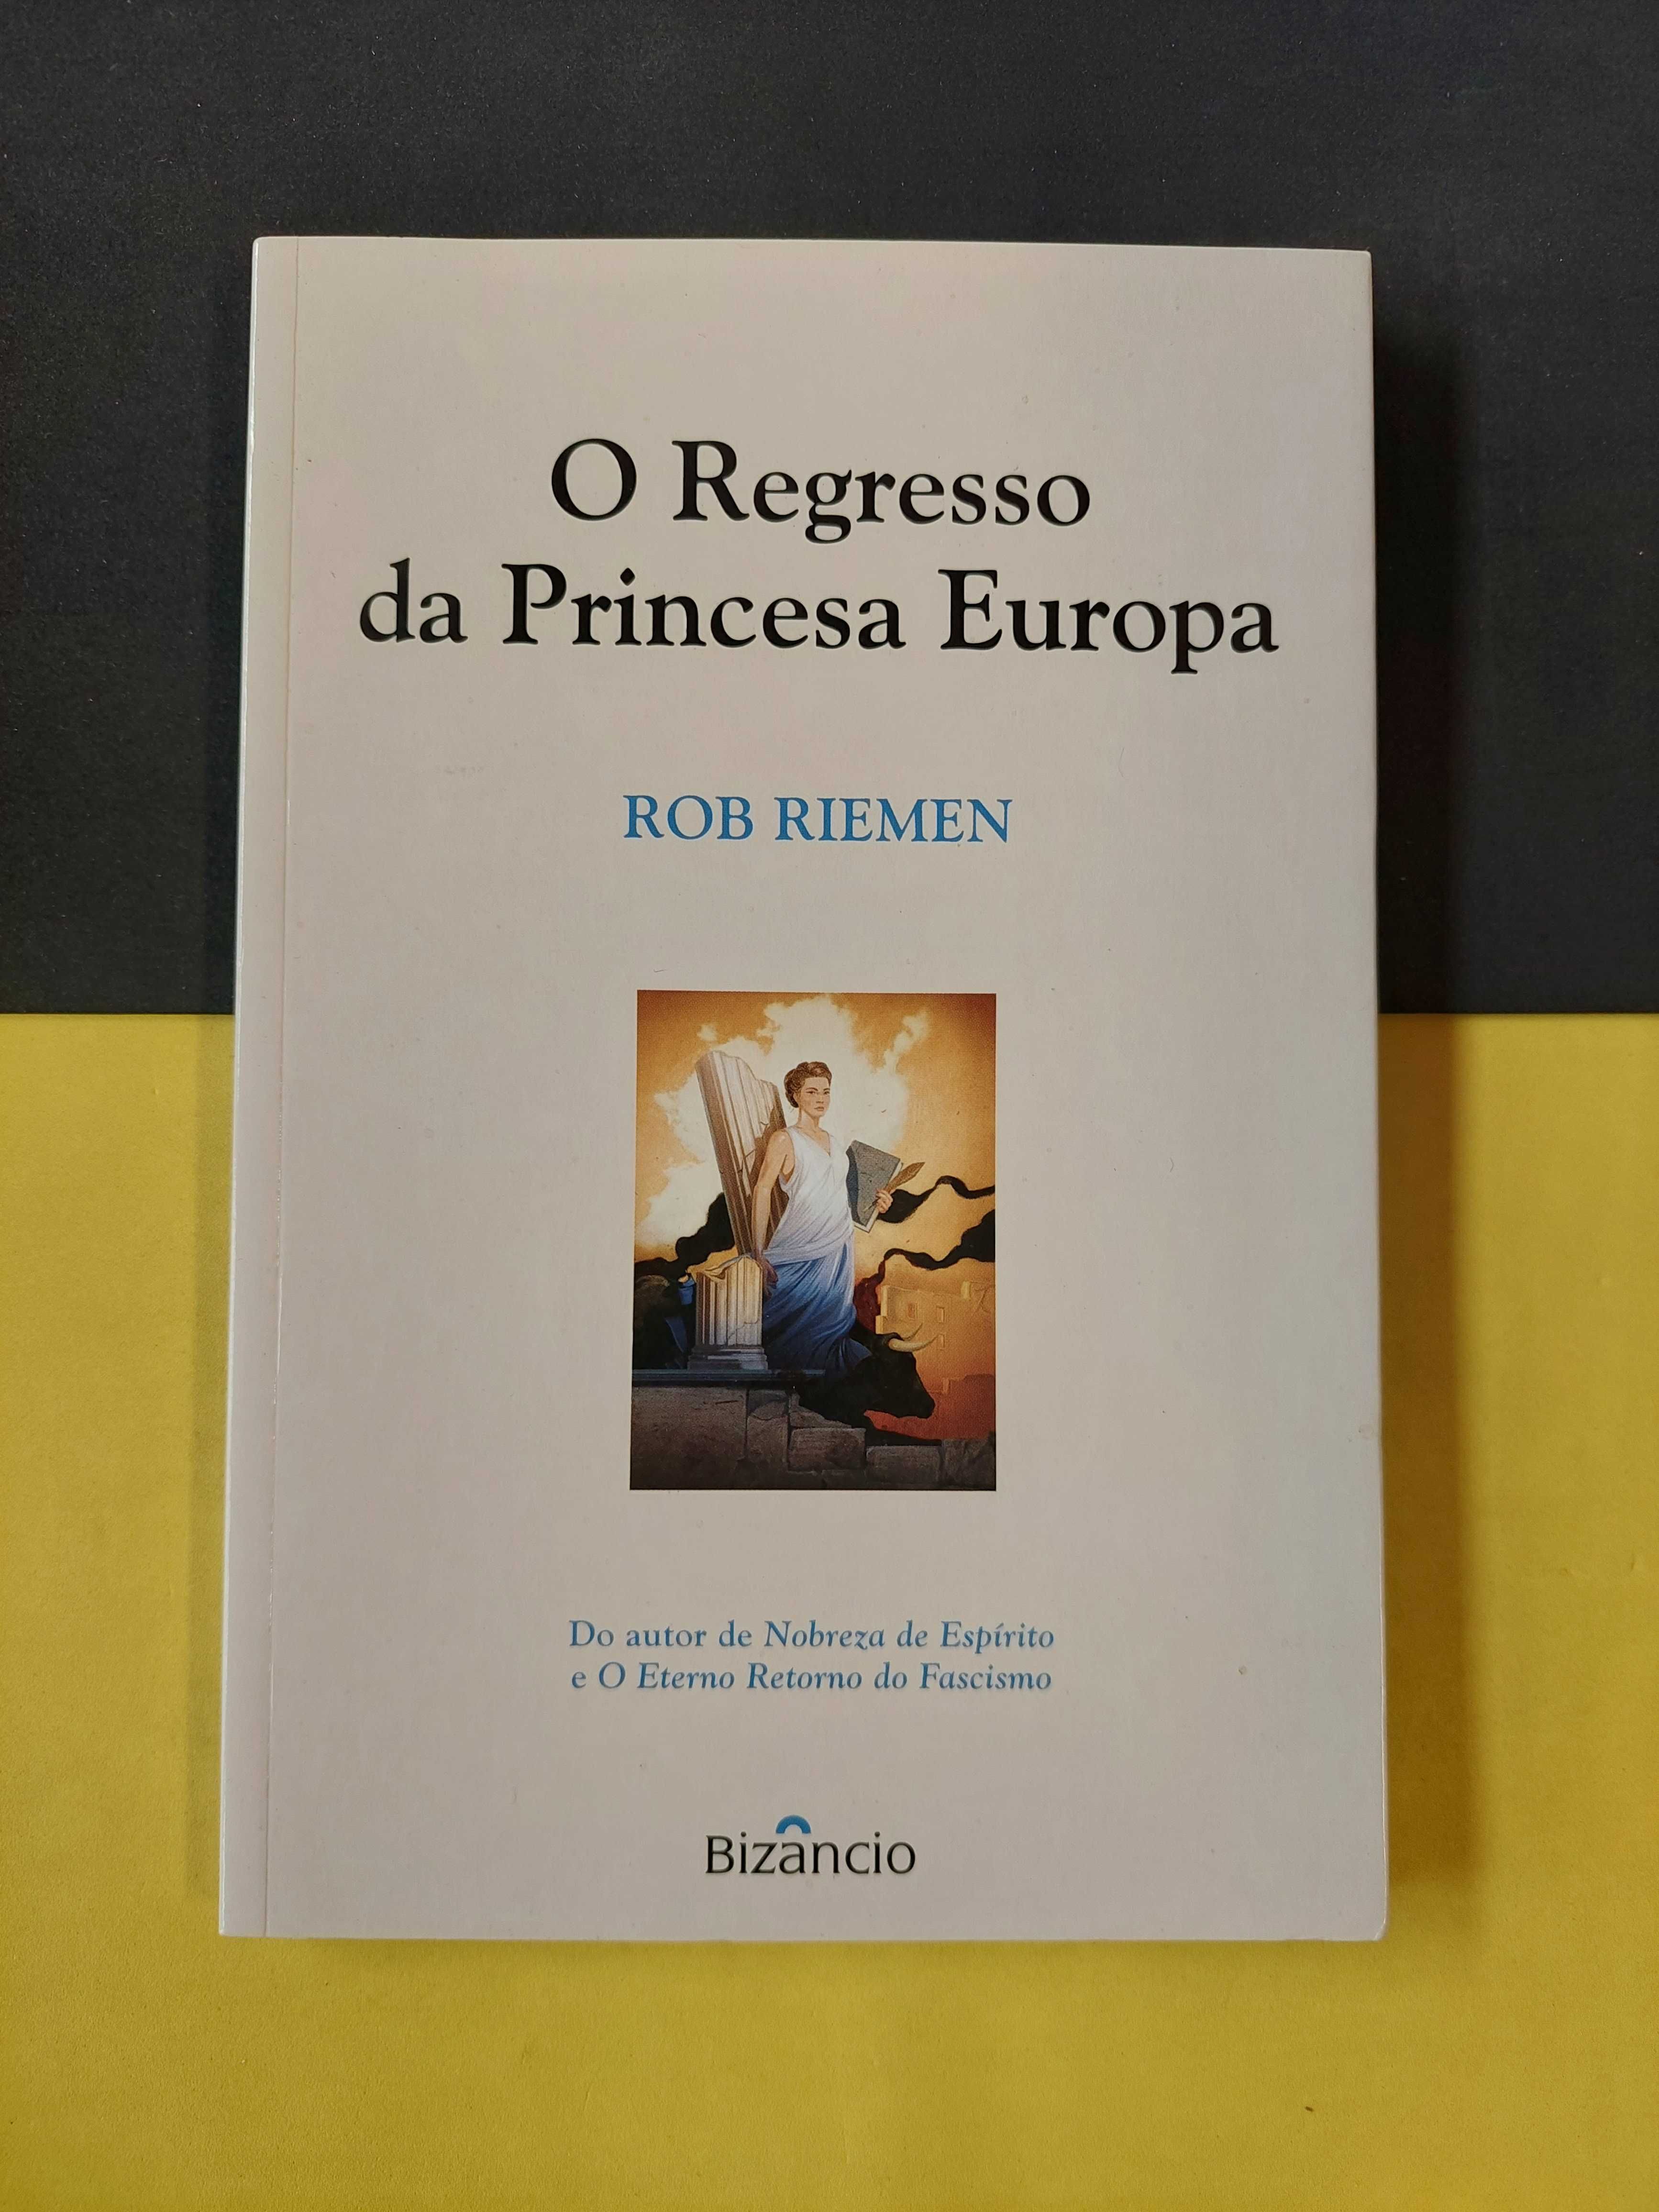 Rob Riemen - O regresso da princesa europa